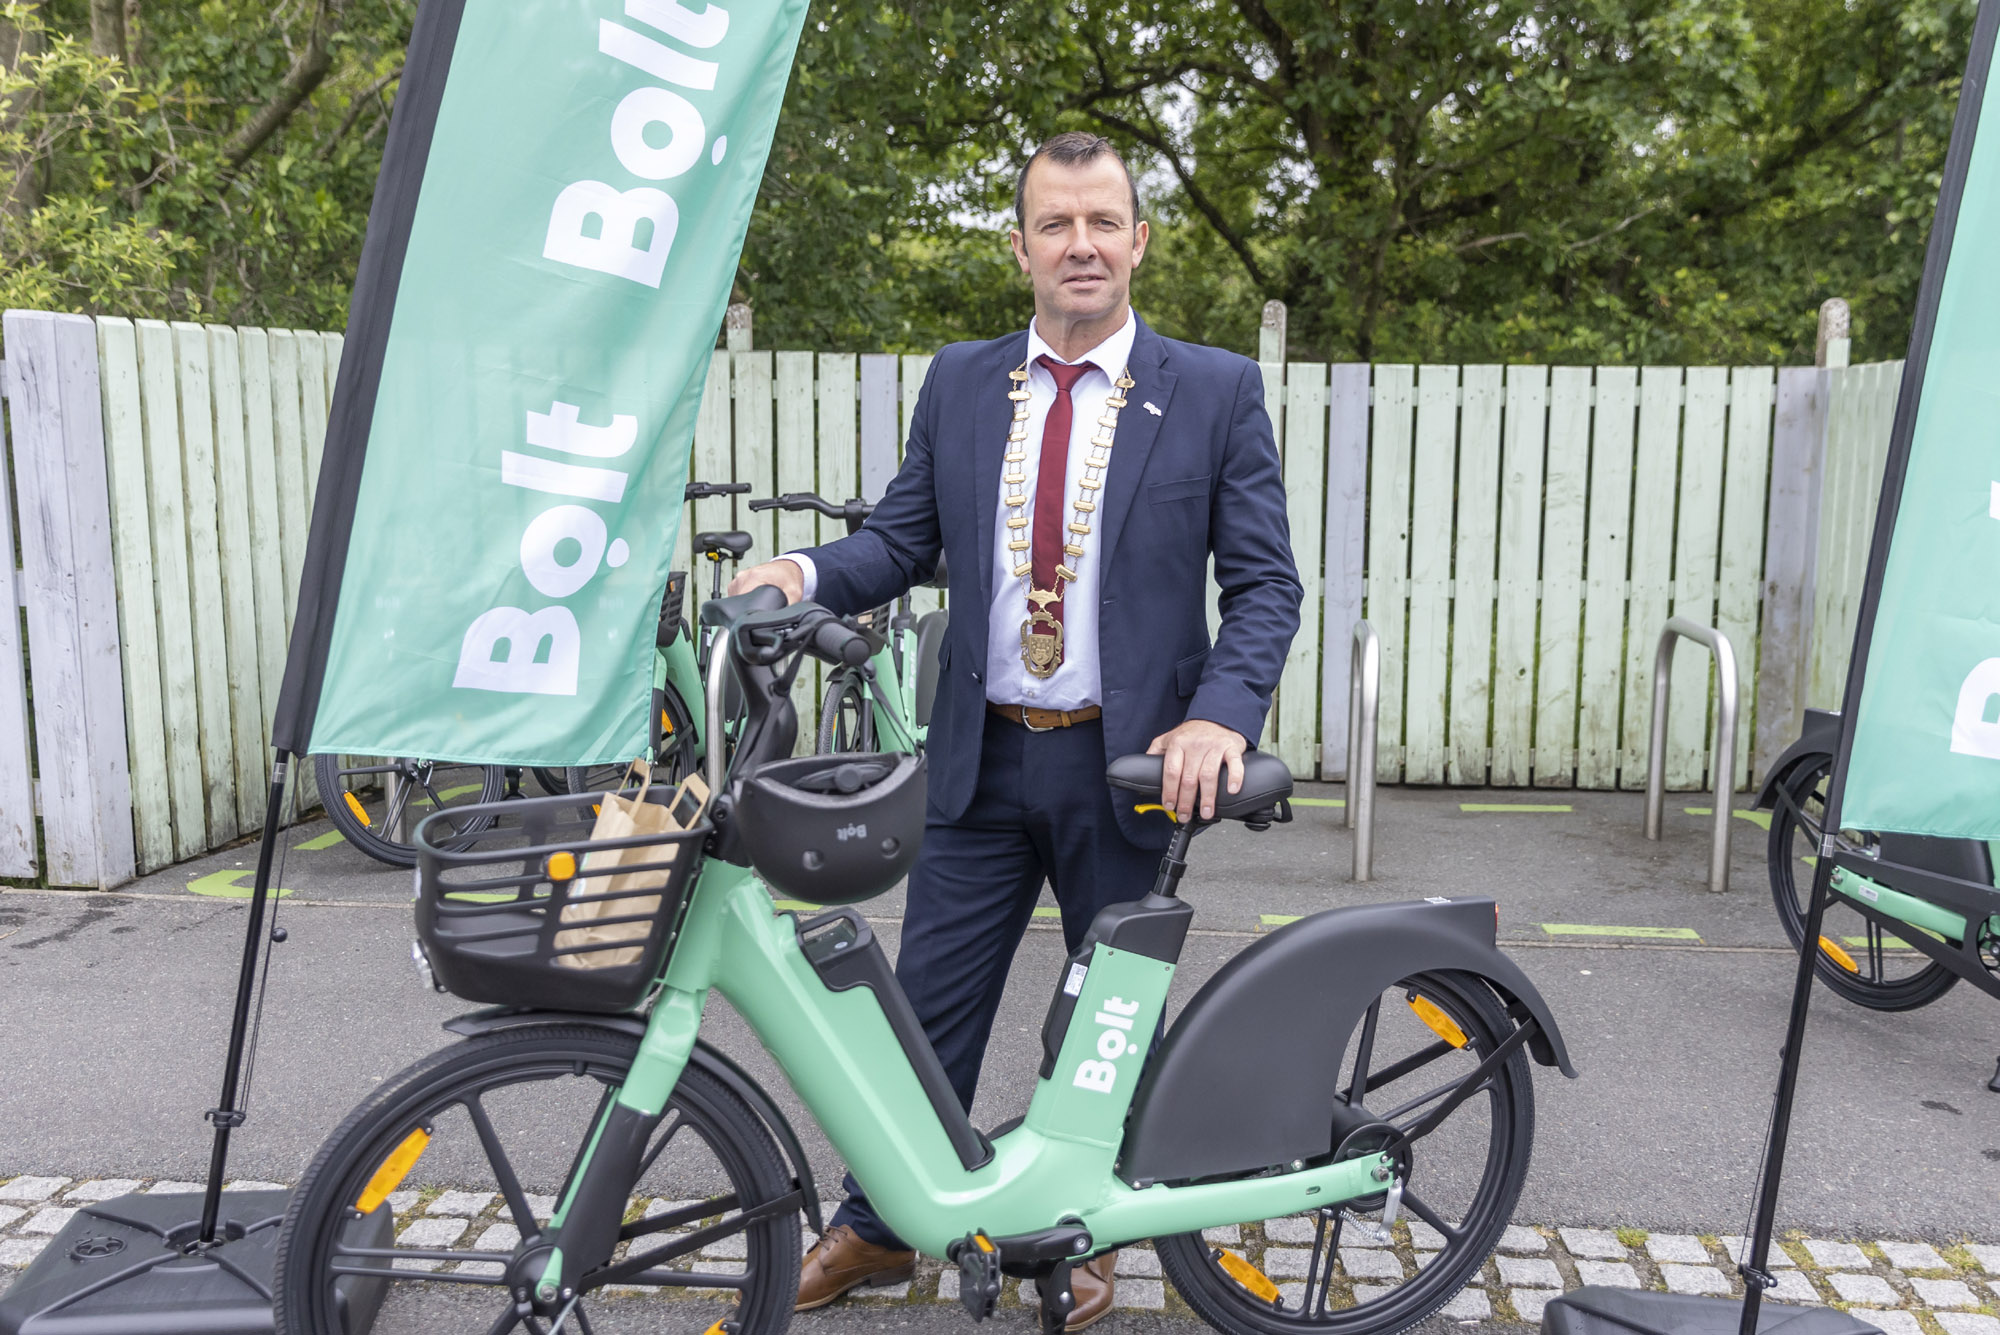 Launch of Bolt eBikes in Sligo Town